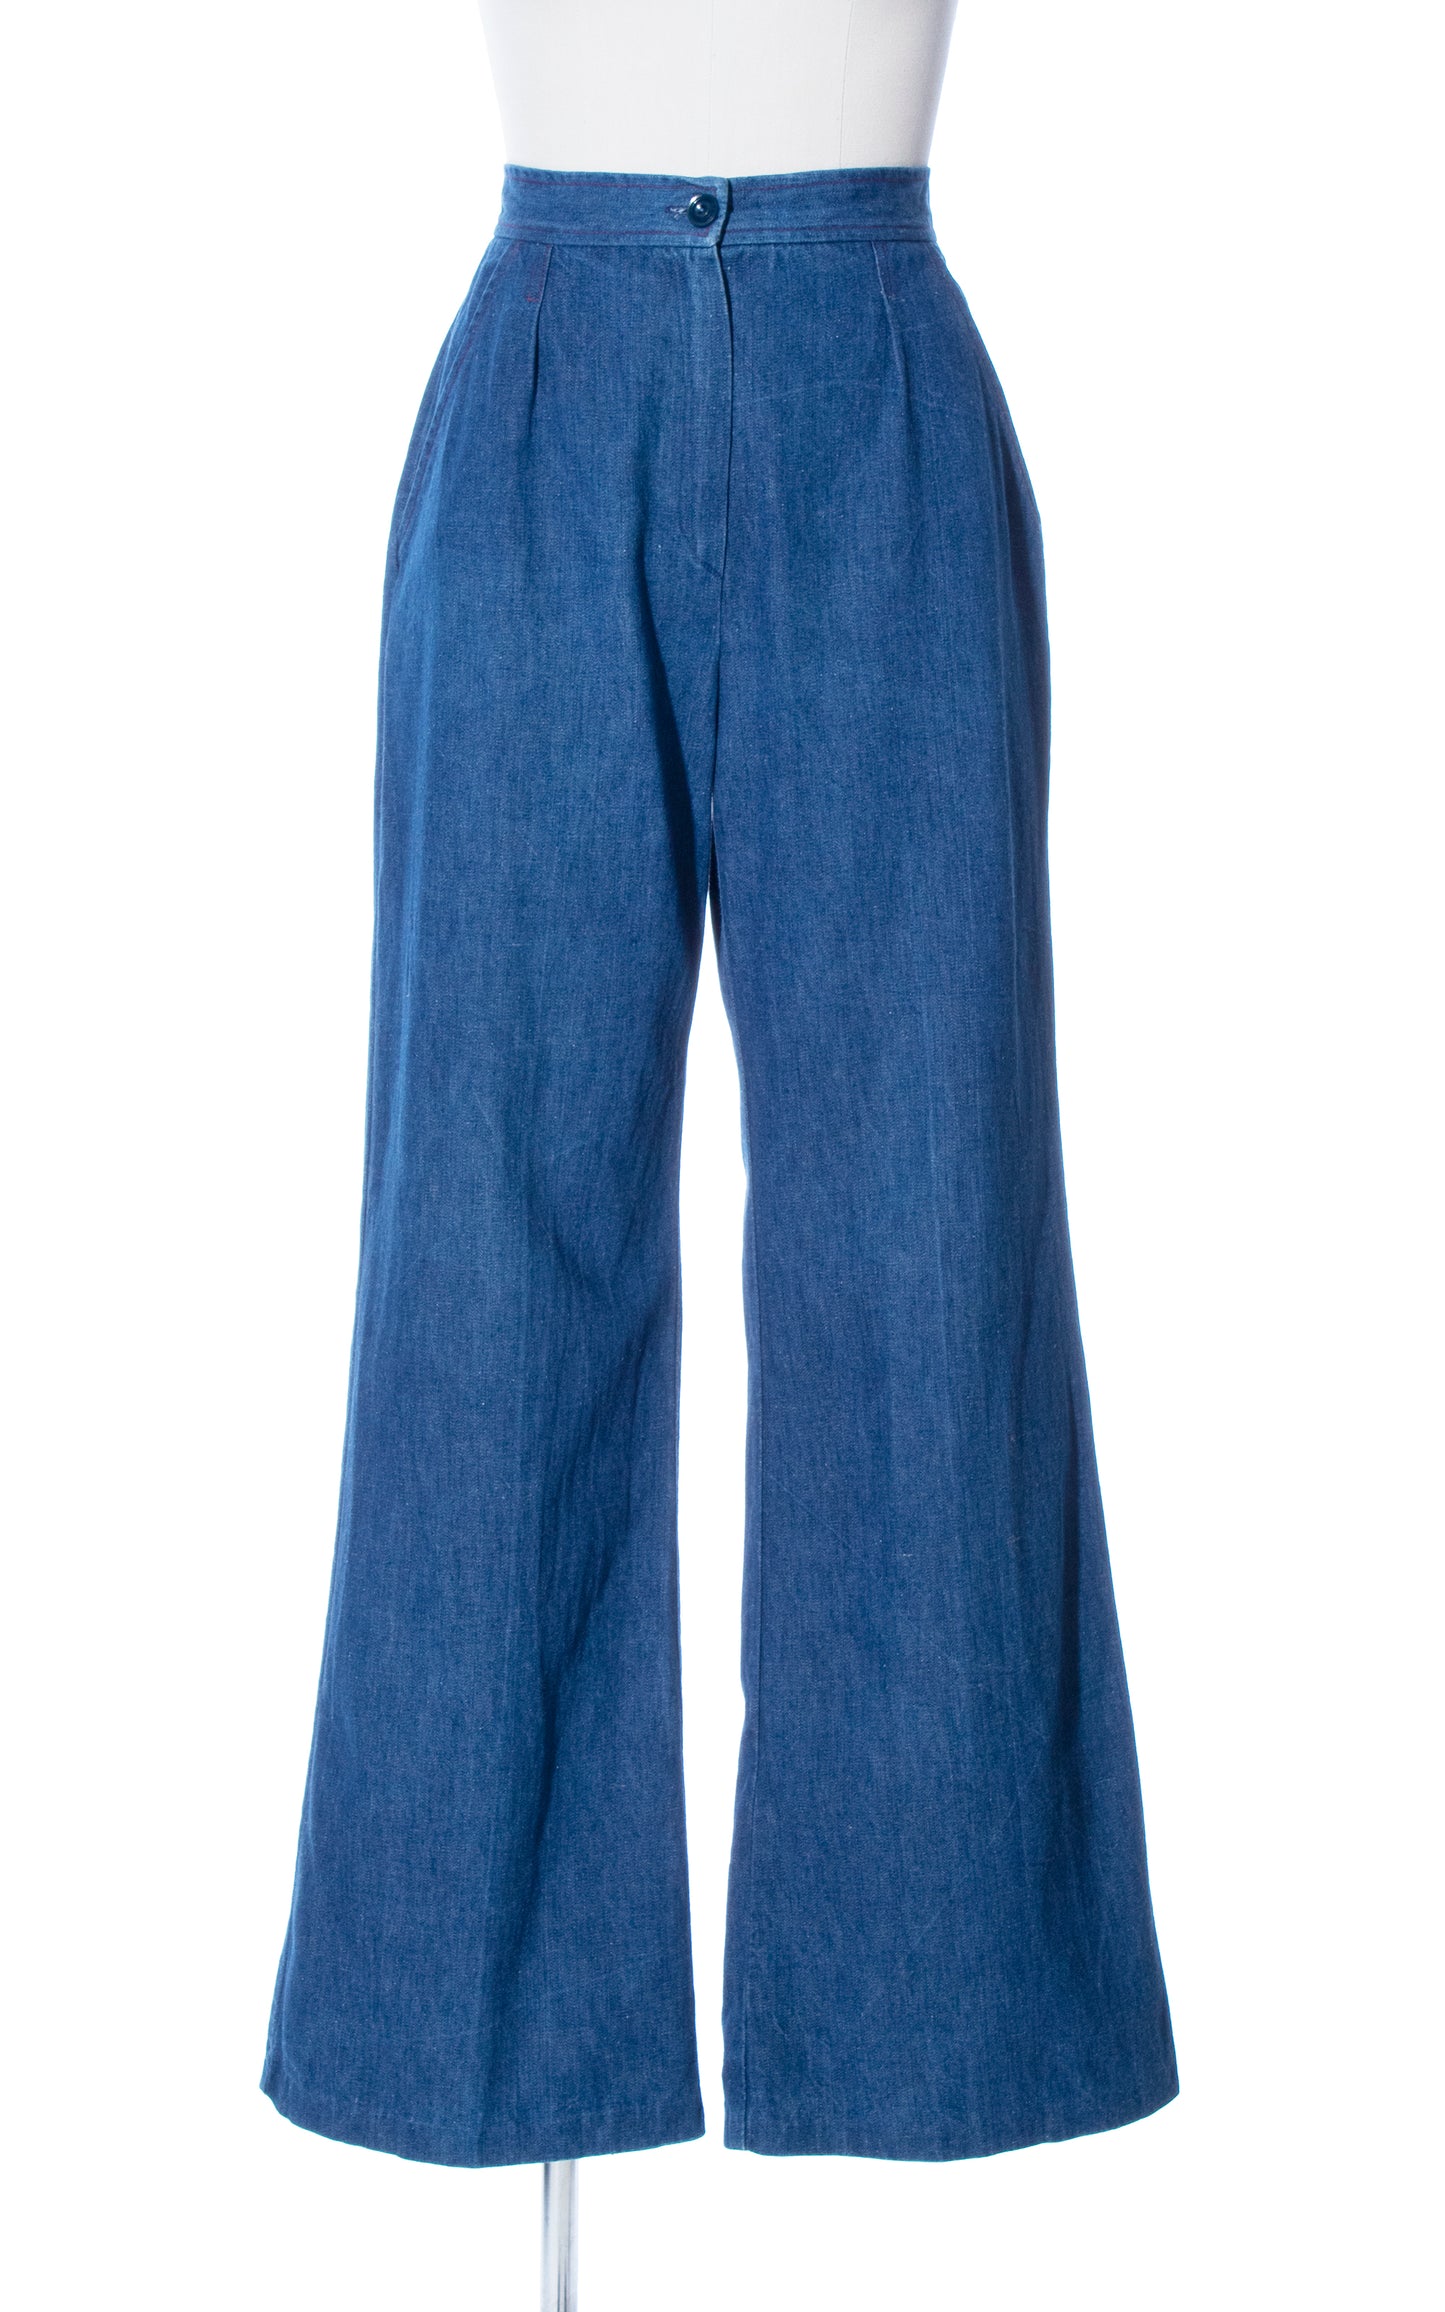 Vintage 70s 1970s Denim High Waisted Medium Blue Wash Flared Bell Bottom Jeans Birthday Life Vintage